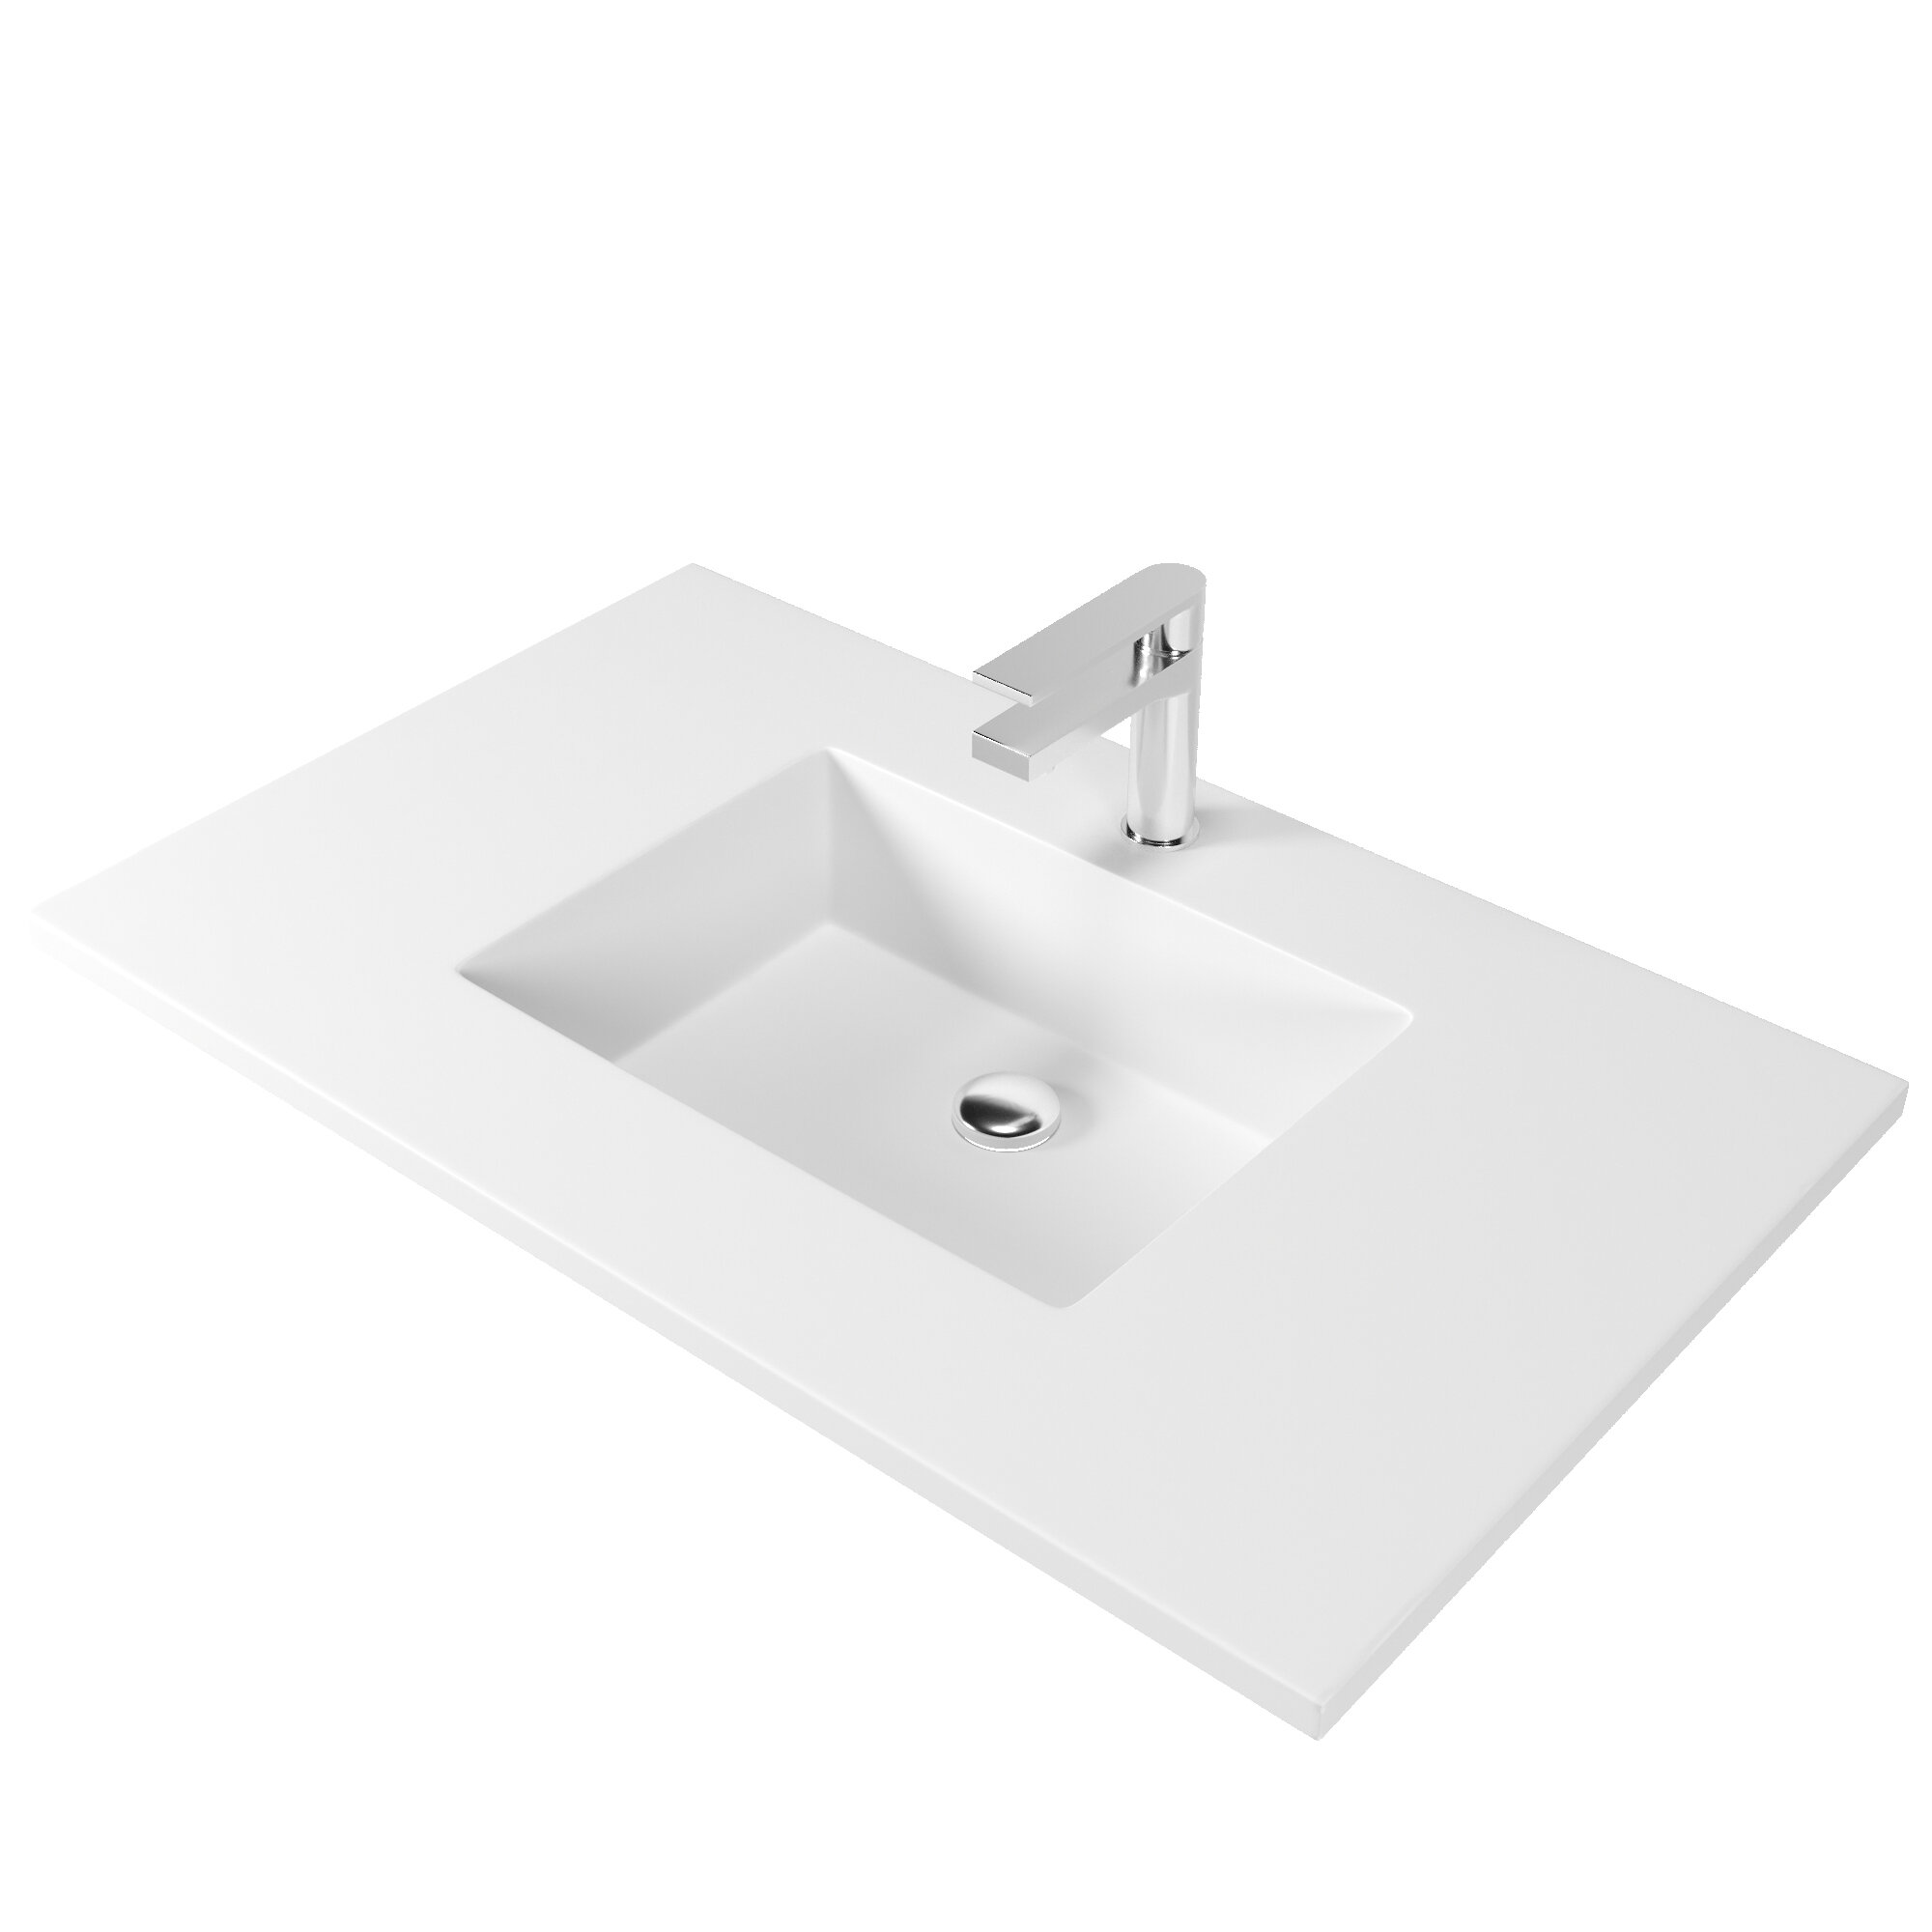 Castellousa 36 Single Bathroom Vanity Top In Matte White With Sink Reviews Wayfair